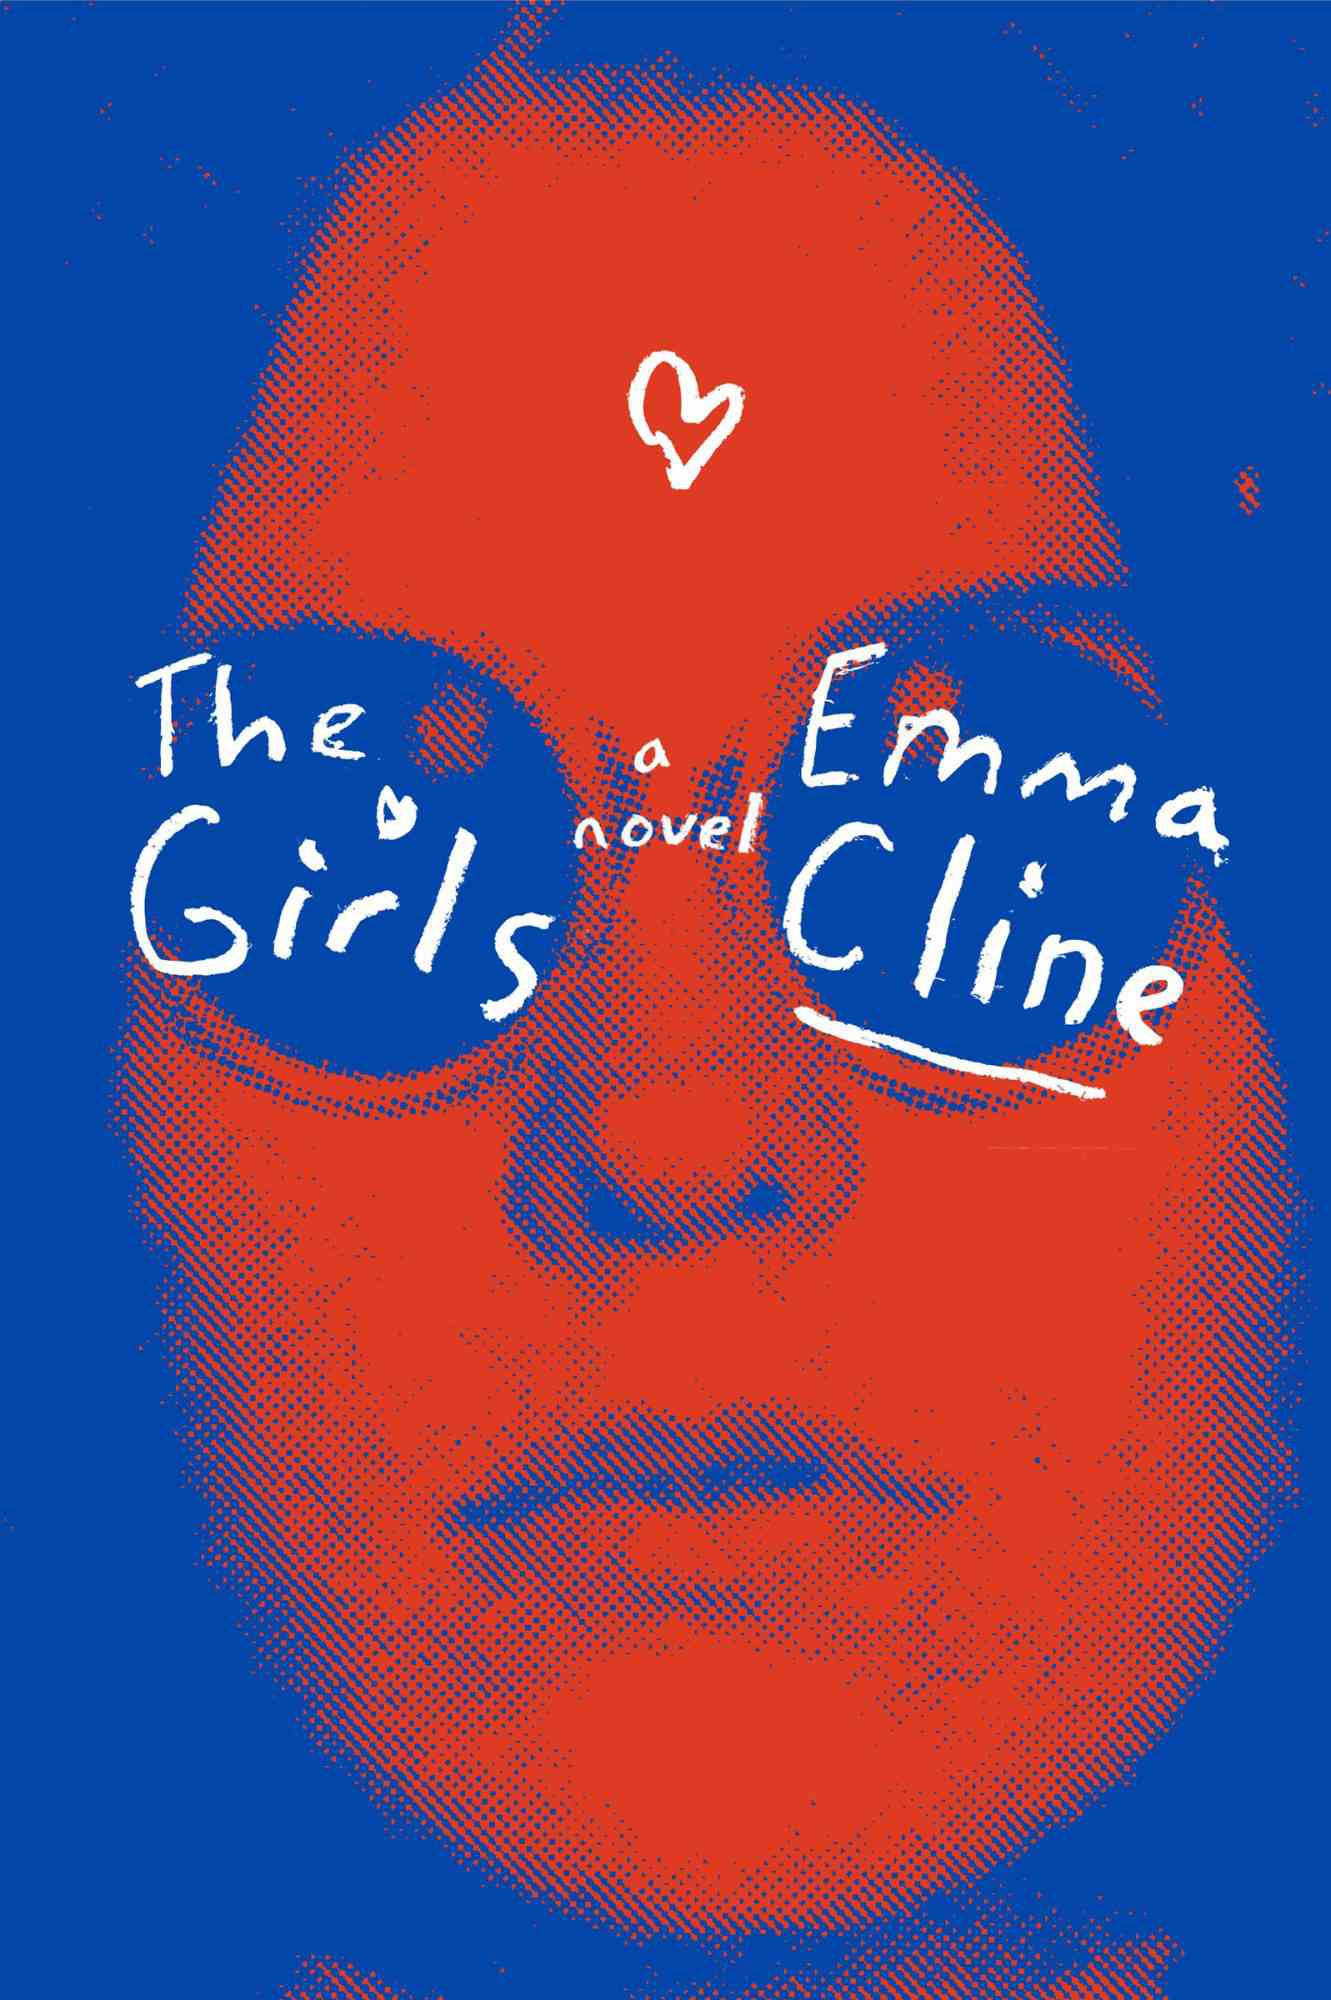 Emma Cline, The Girls